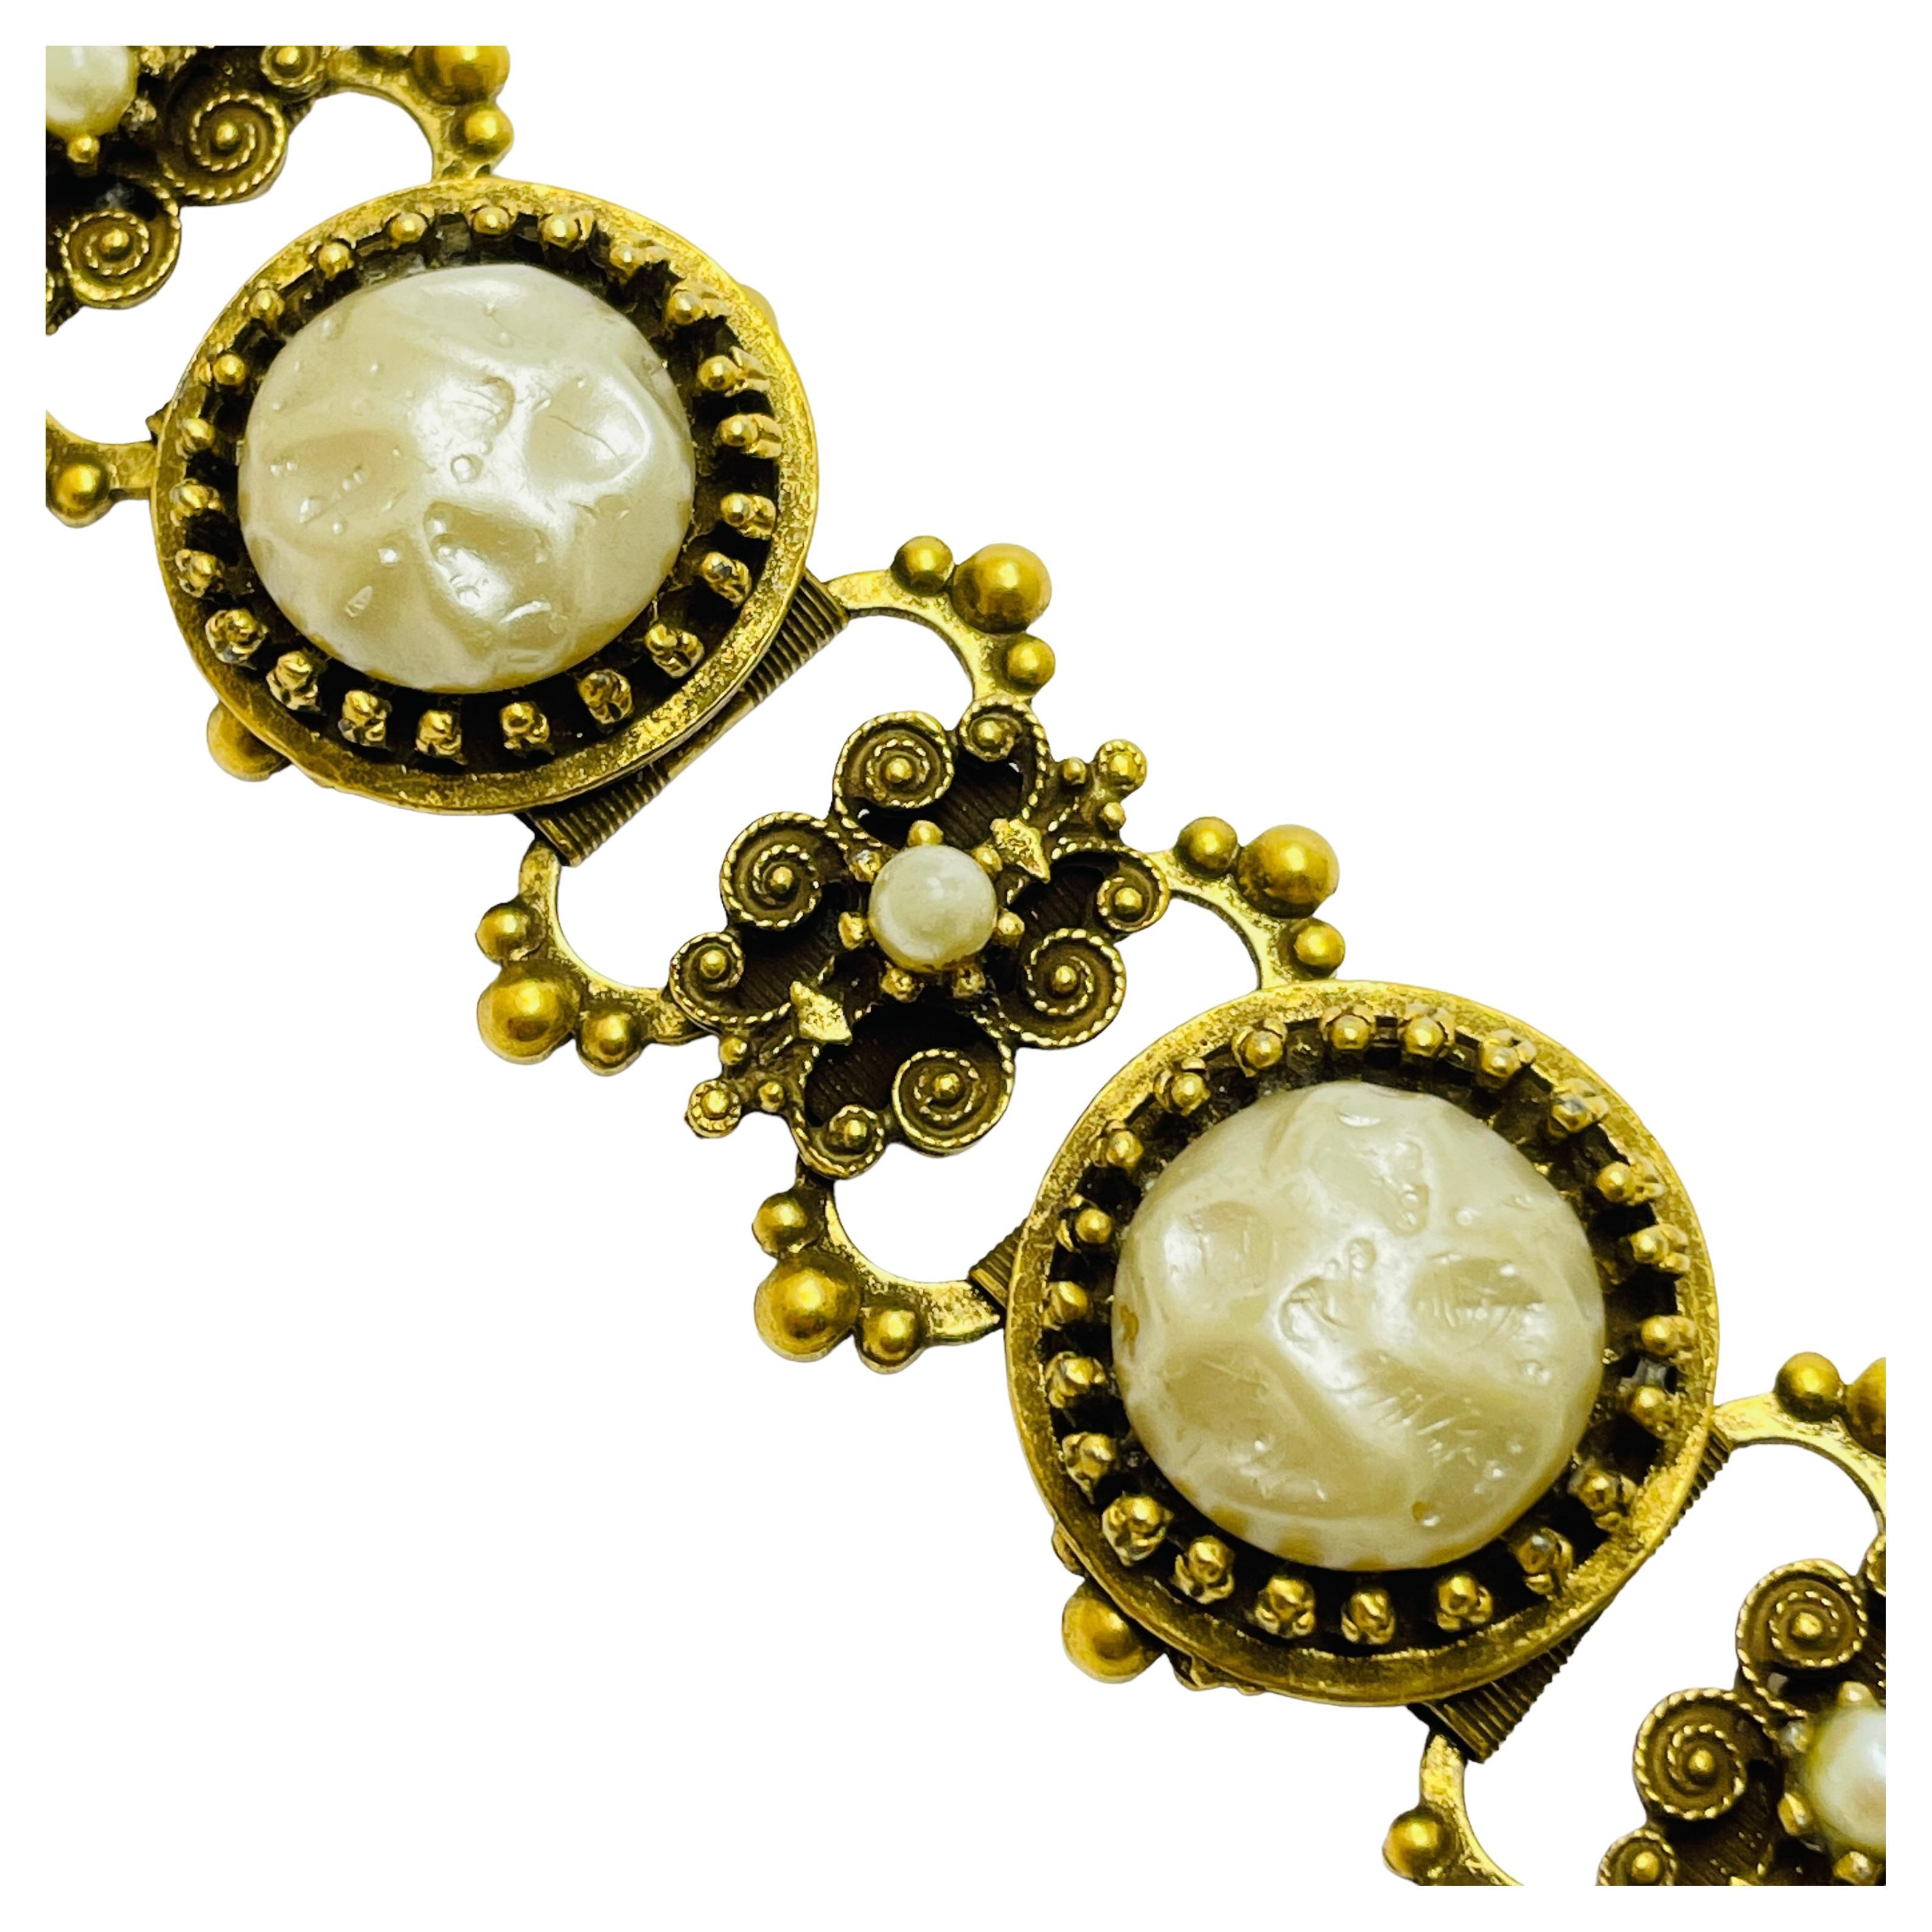  Vintage gold tone designer clip on earrings